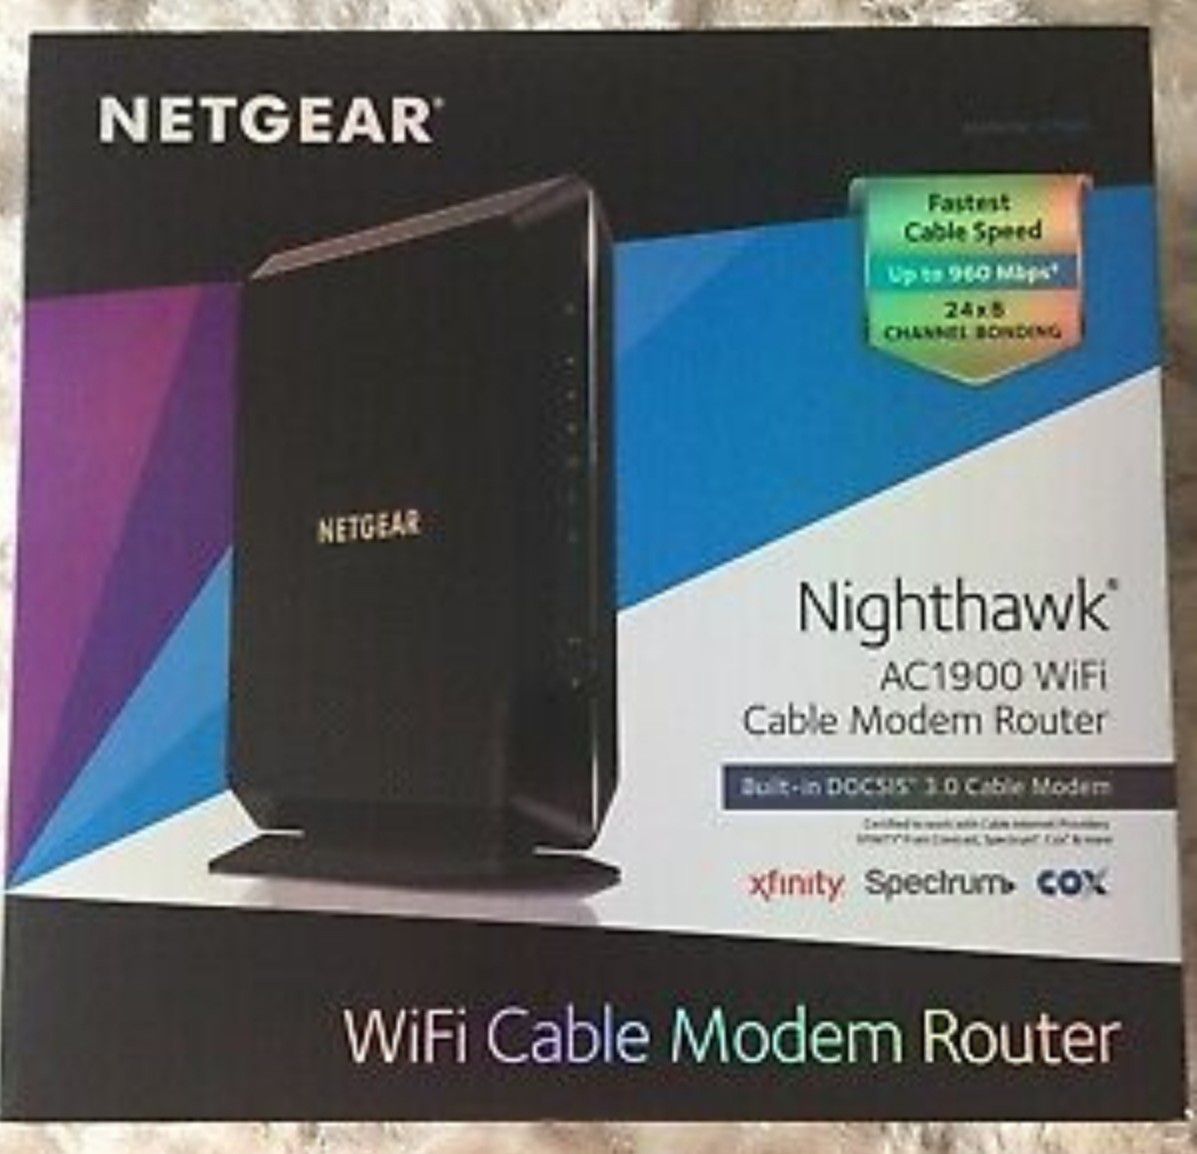 Netgear NIGHTHAWK Wifi Modem Router model C7000 (CABLE Wifi modem router combo)